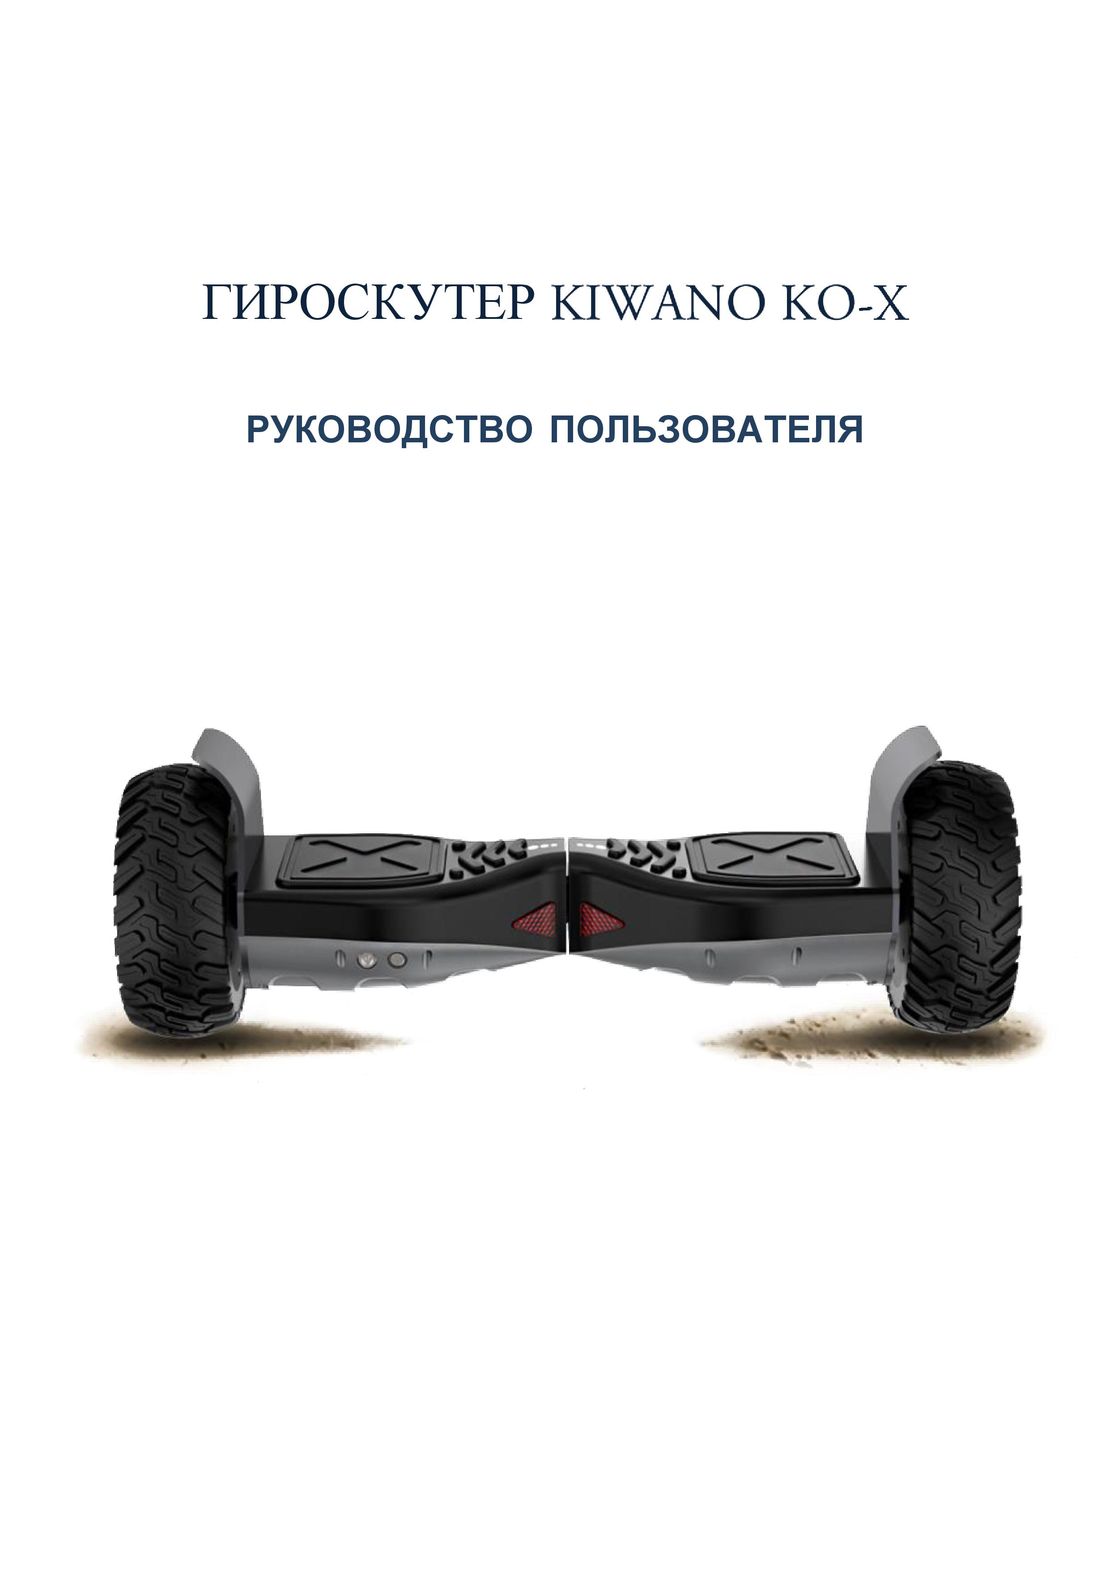 Kiwano KO-Xинструкция на русском